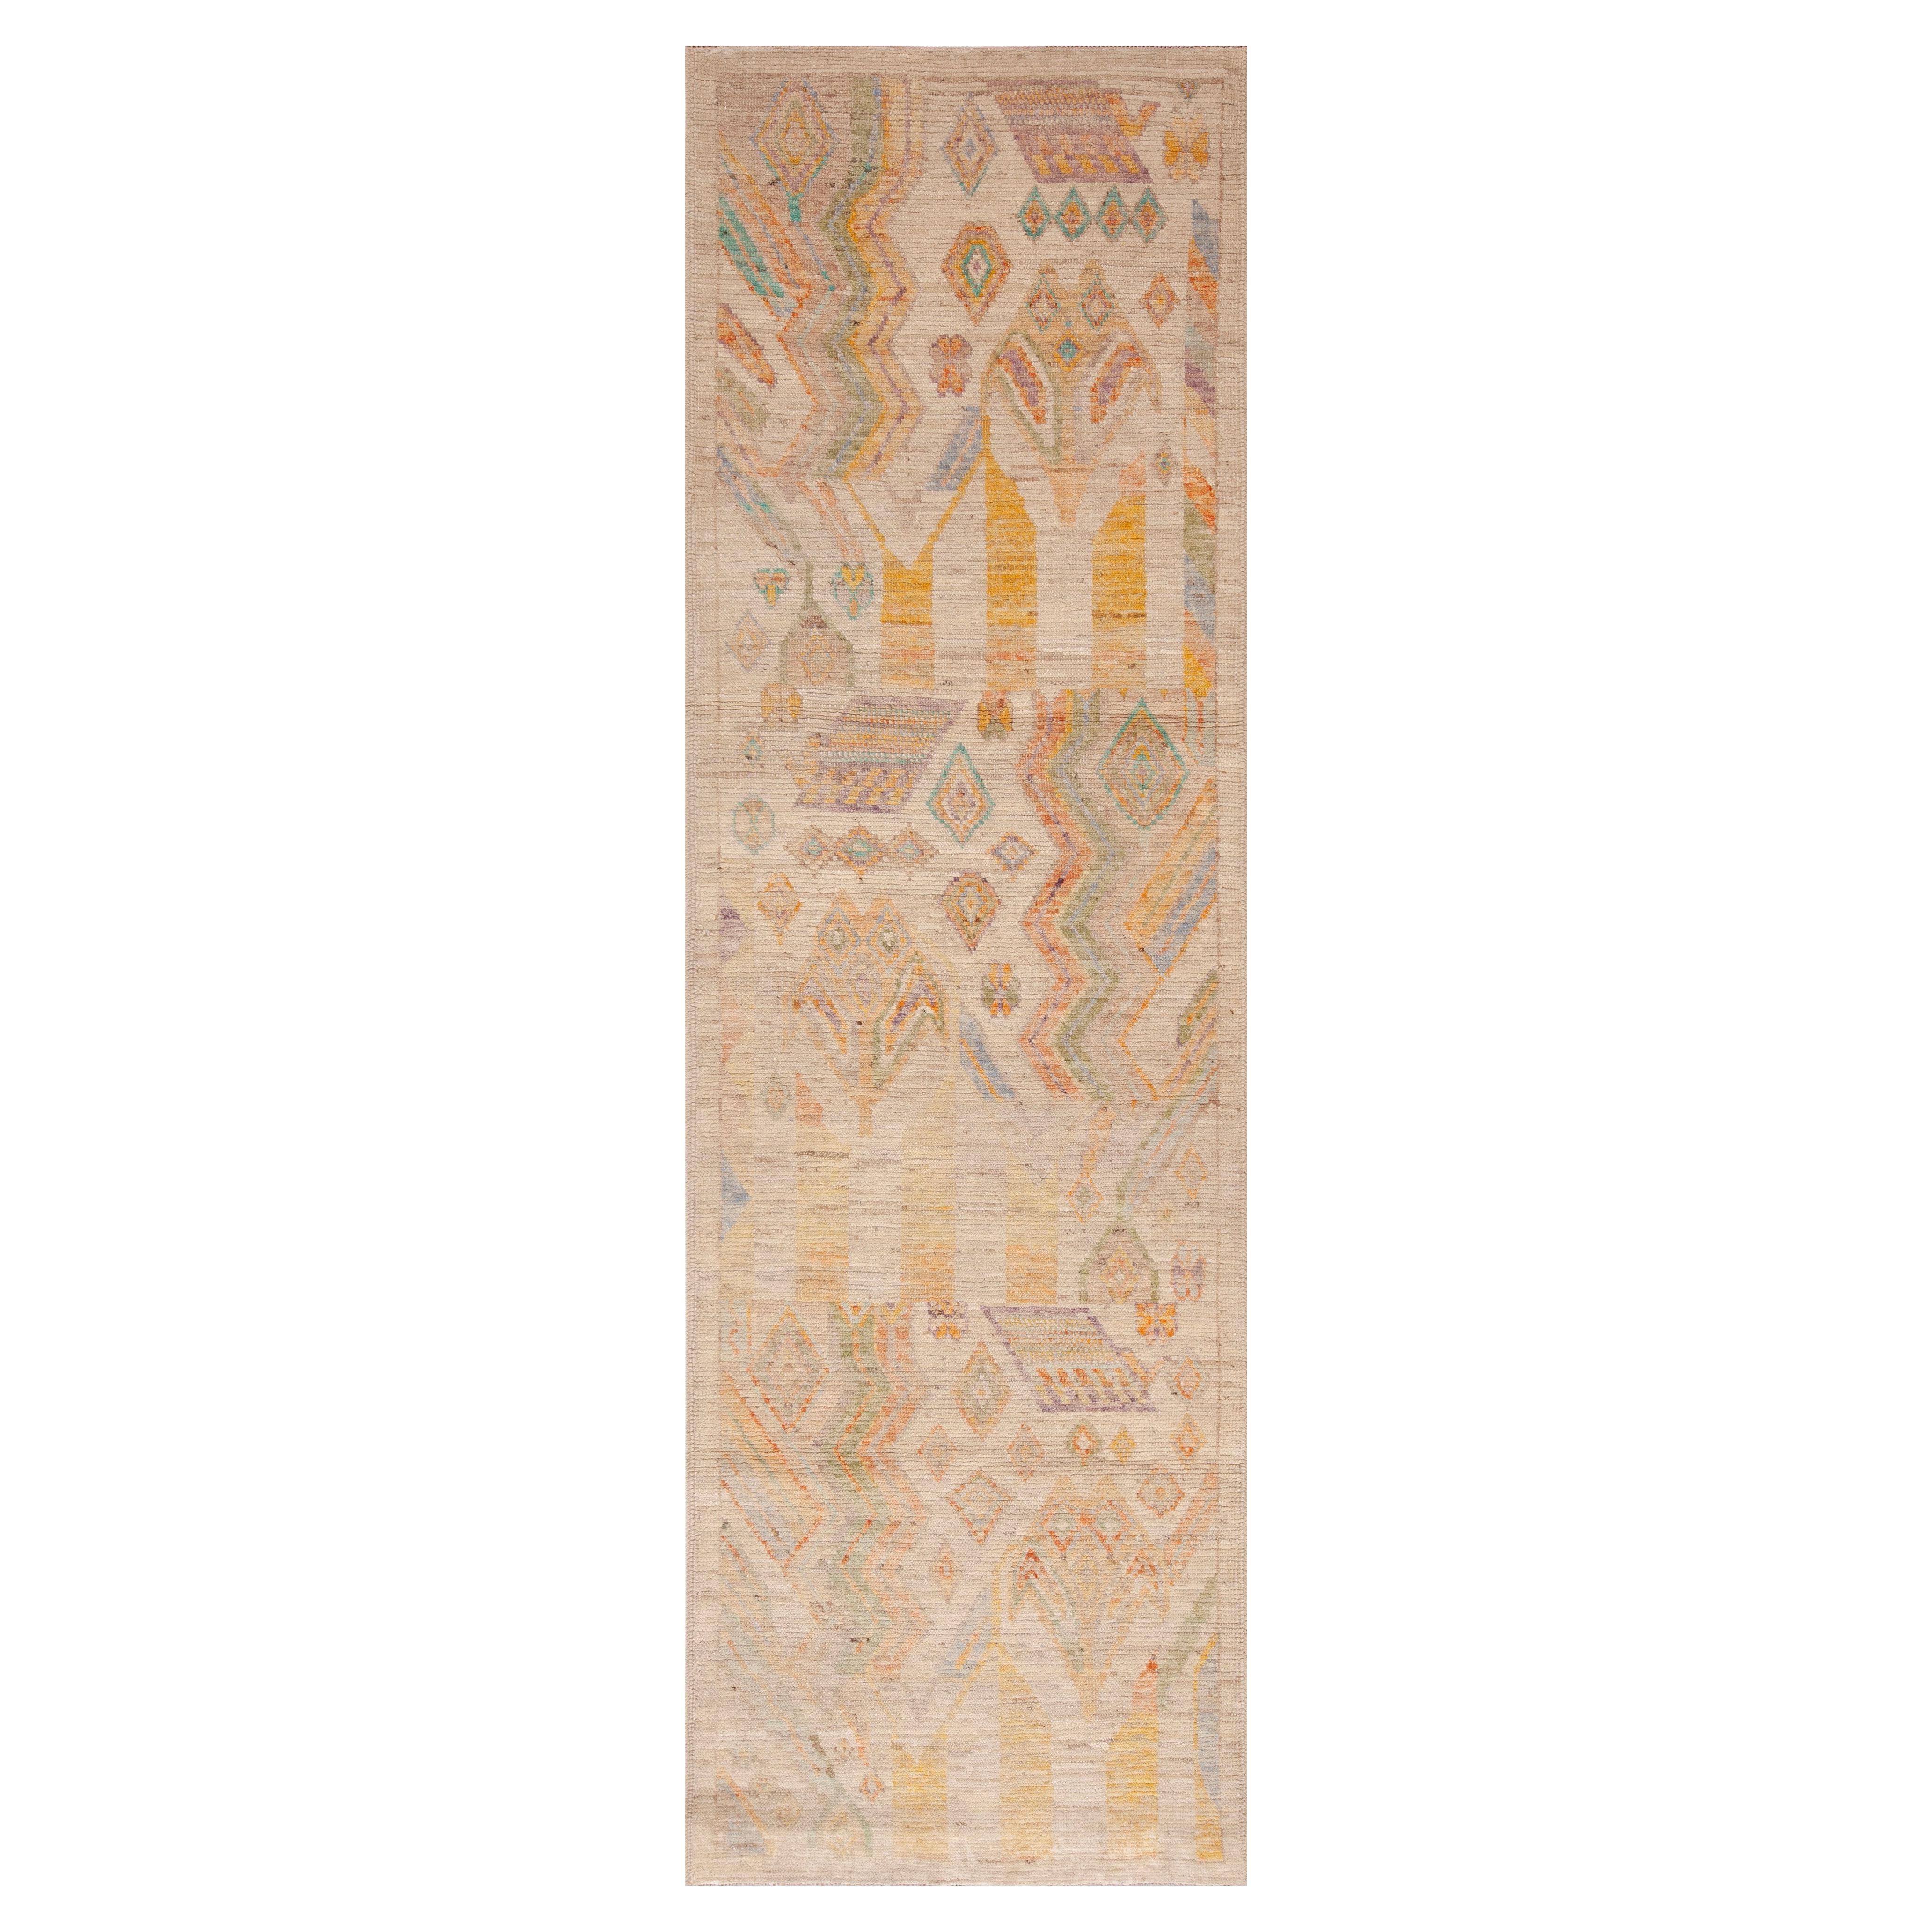 Nazmiyal Collection Tribal Nomadic Light Ivory Color Modern Runner Rug 3' x 9'9"